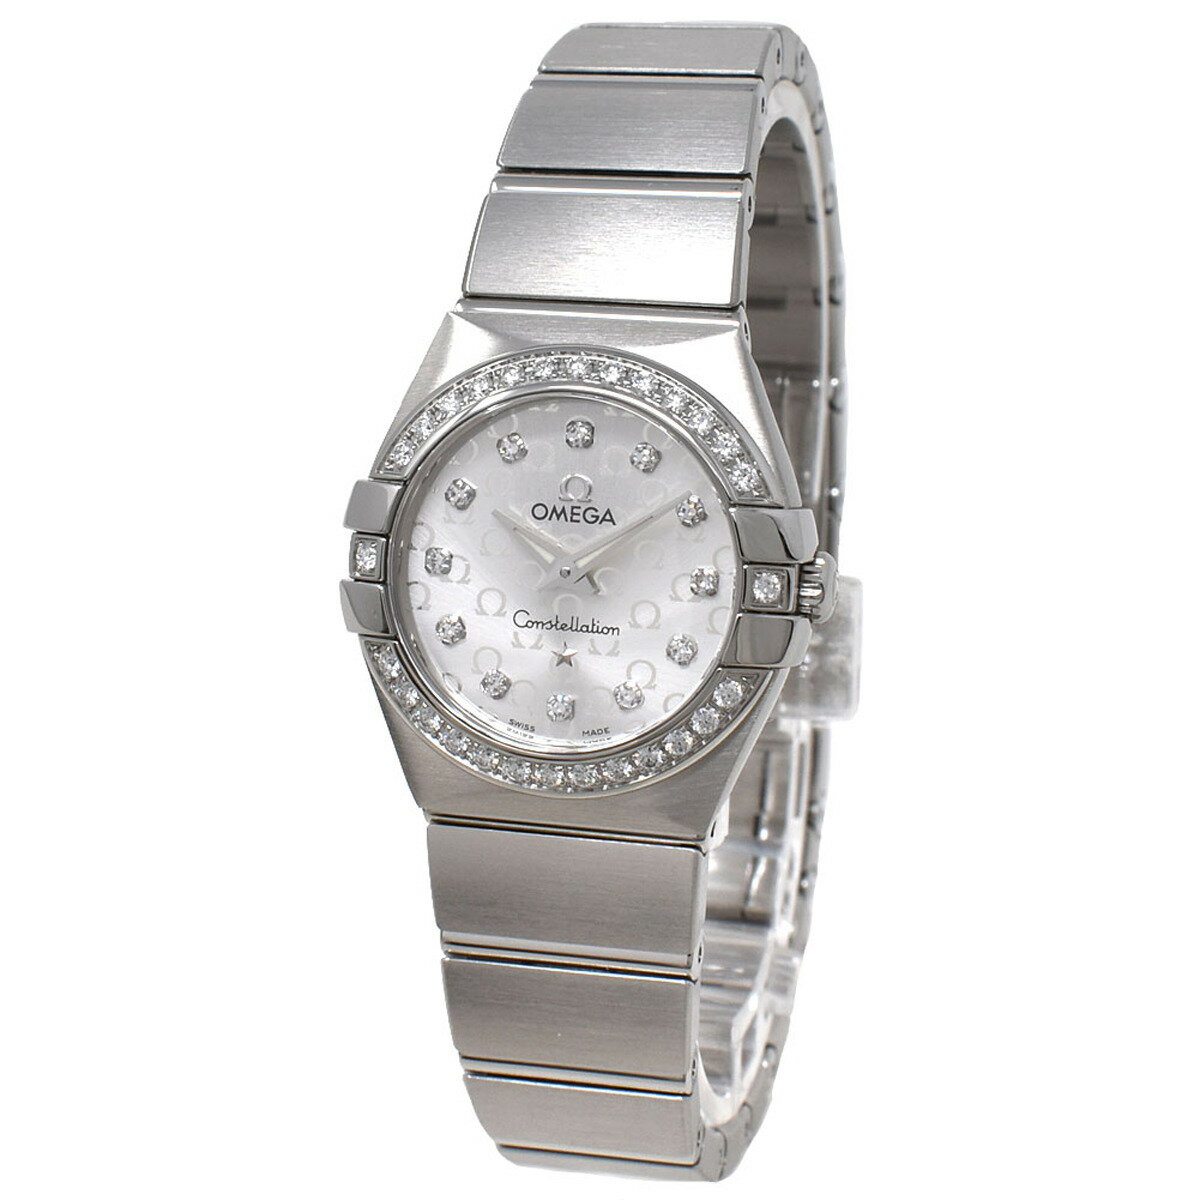 OMEGA オメガ 腕時計 コンステレーション ブラッシュ ダイヤモンド 123.15.24.60.52.001 レディース ウォッチ 海外正規品 シルバー